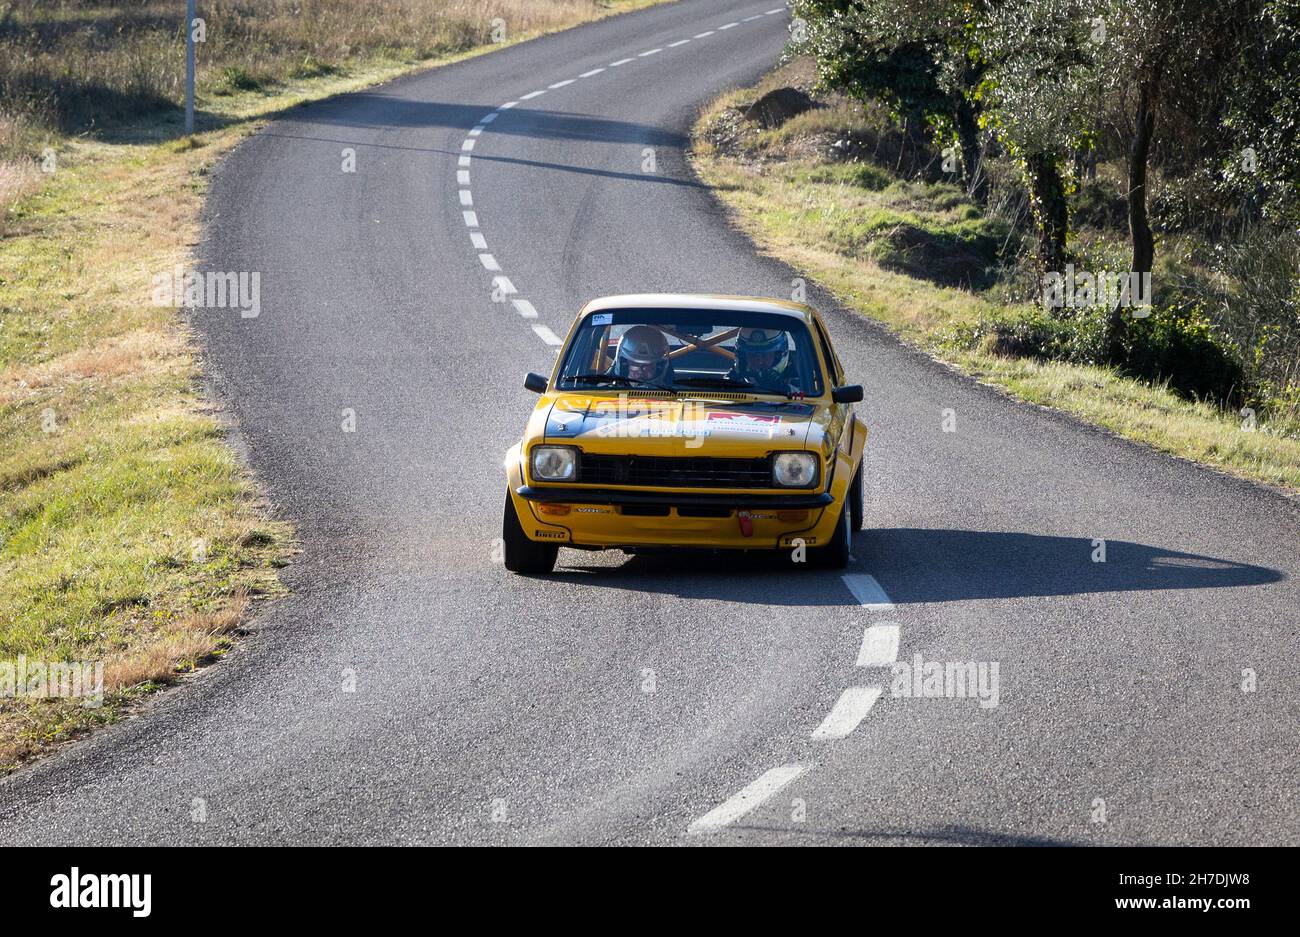 Opel Kadett C GT/E 16 V taking part in the timed section of the Rally Costa Brava 2021 in Girona, Spain Stock Photo